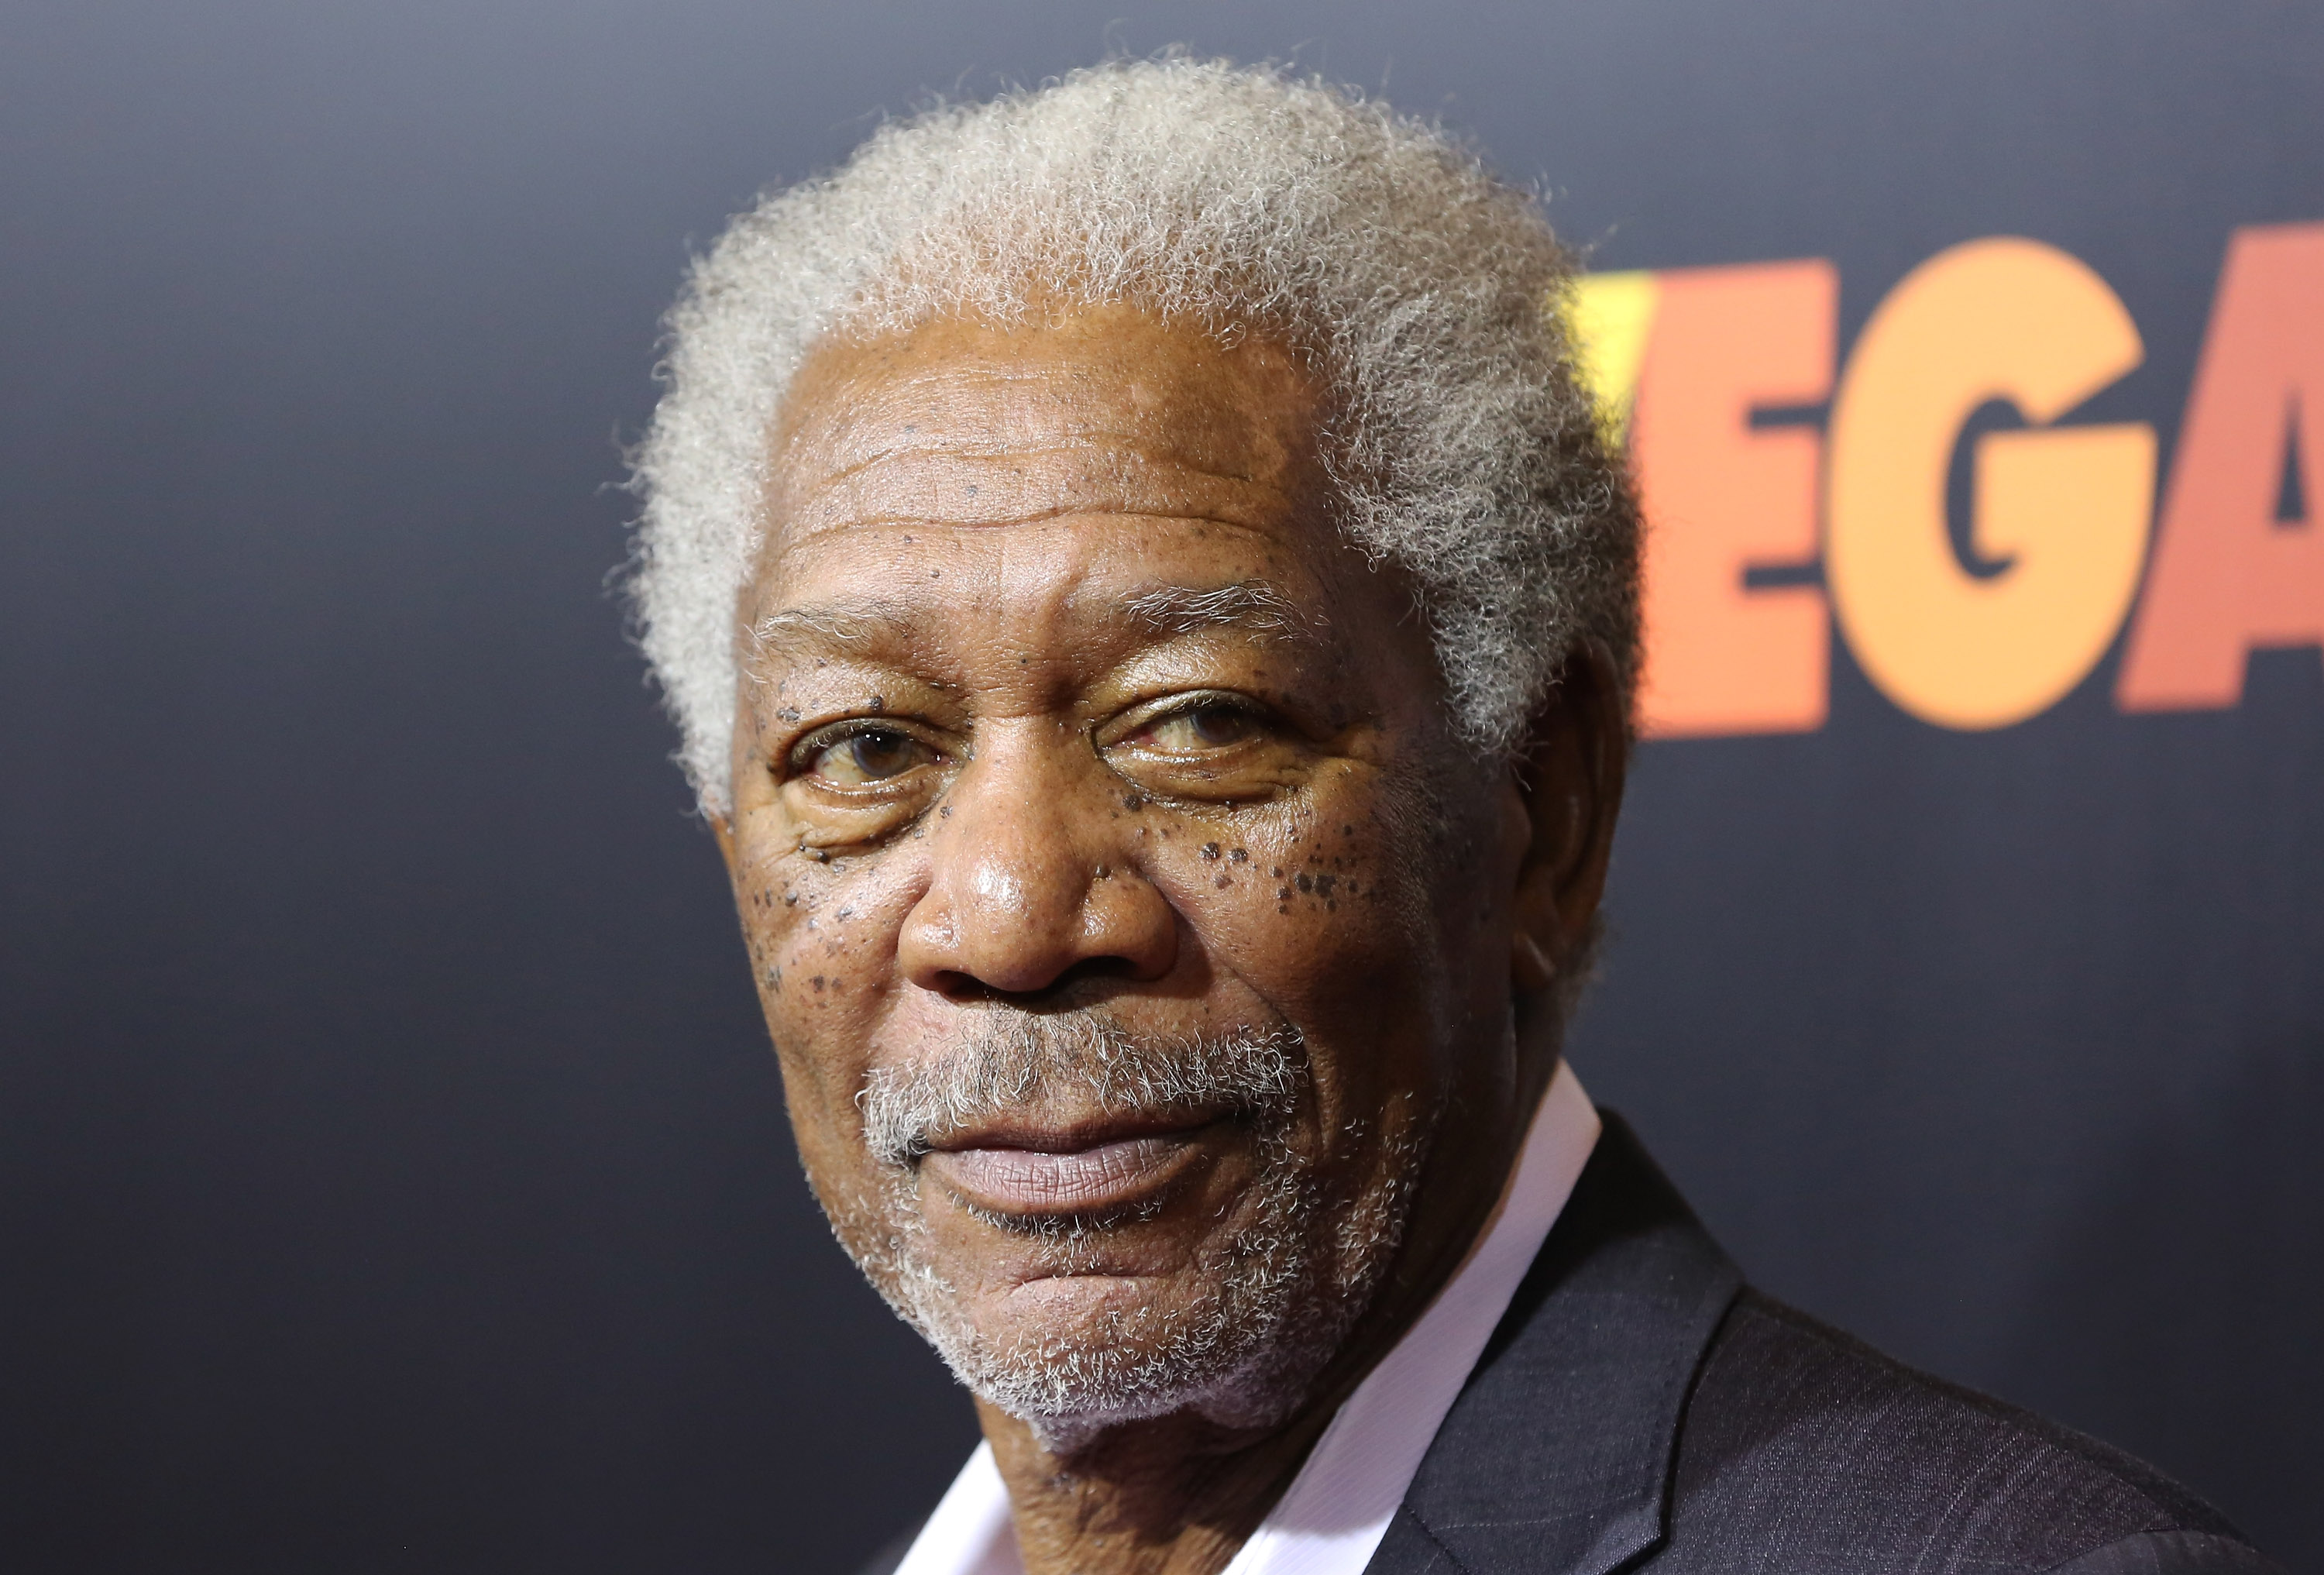 Morgan Freeman bei der "Last Vegas" Special Screening Party 2013 | Quelle: Getty Images